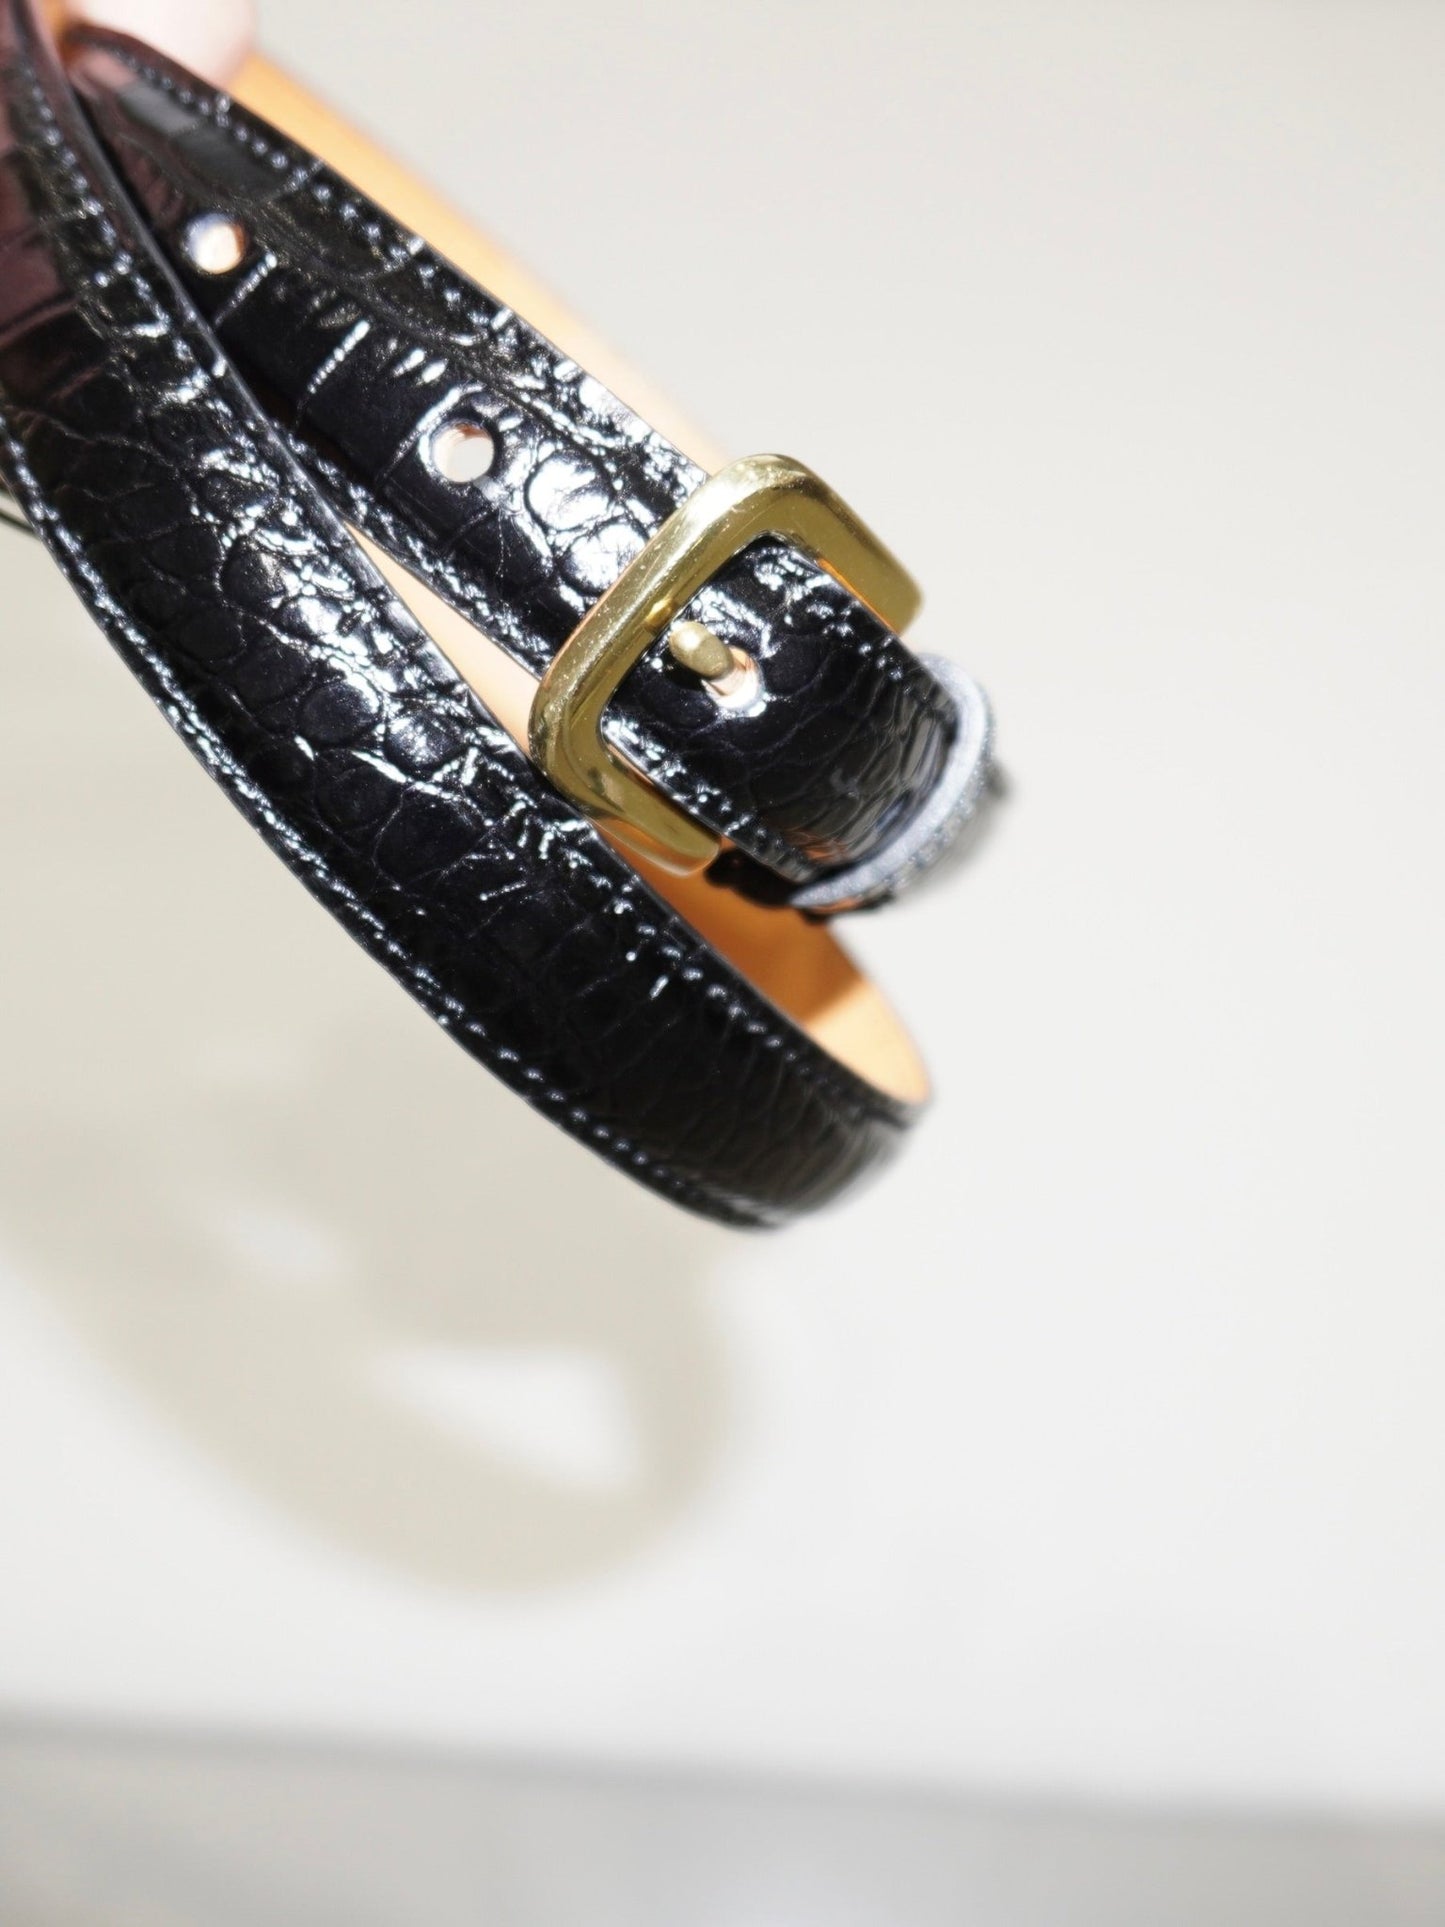 [Scye] Press Croco Dress Belt Black ベルト - #shop_name #アパルティール# #名古屋# #セレクトショップ#